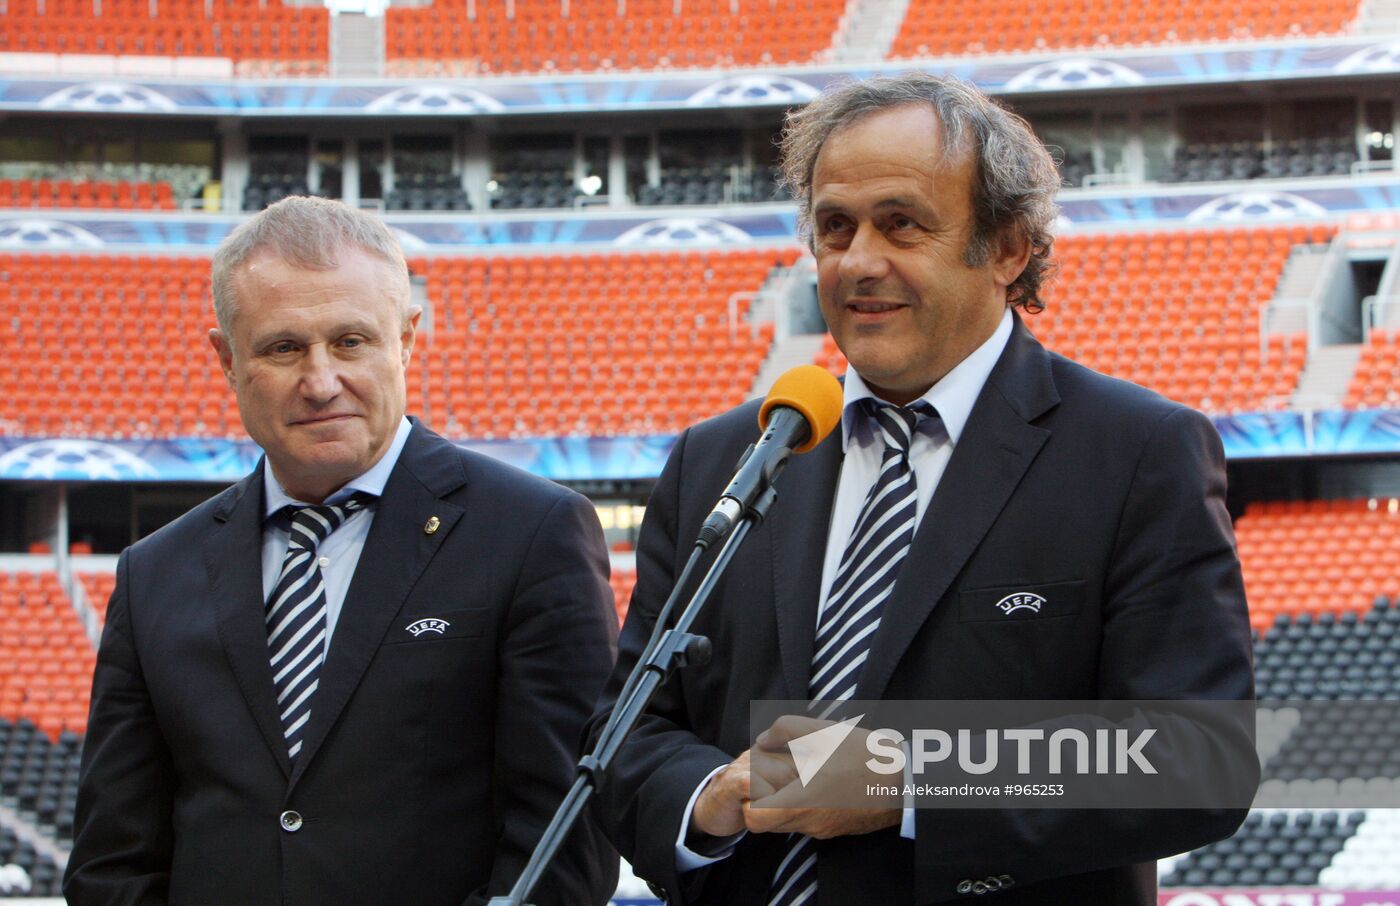 UEFA President Michel Platini's visit to Ukraine